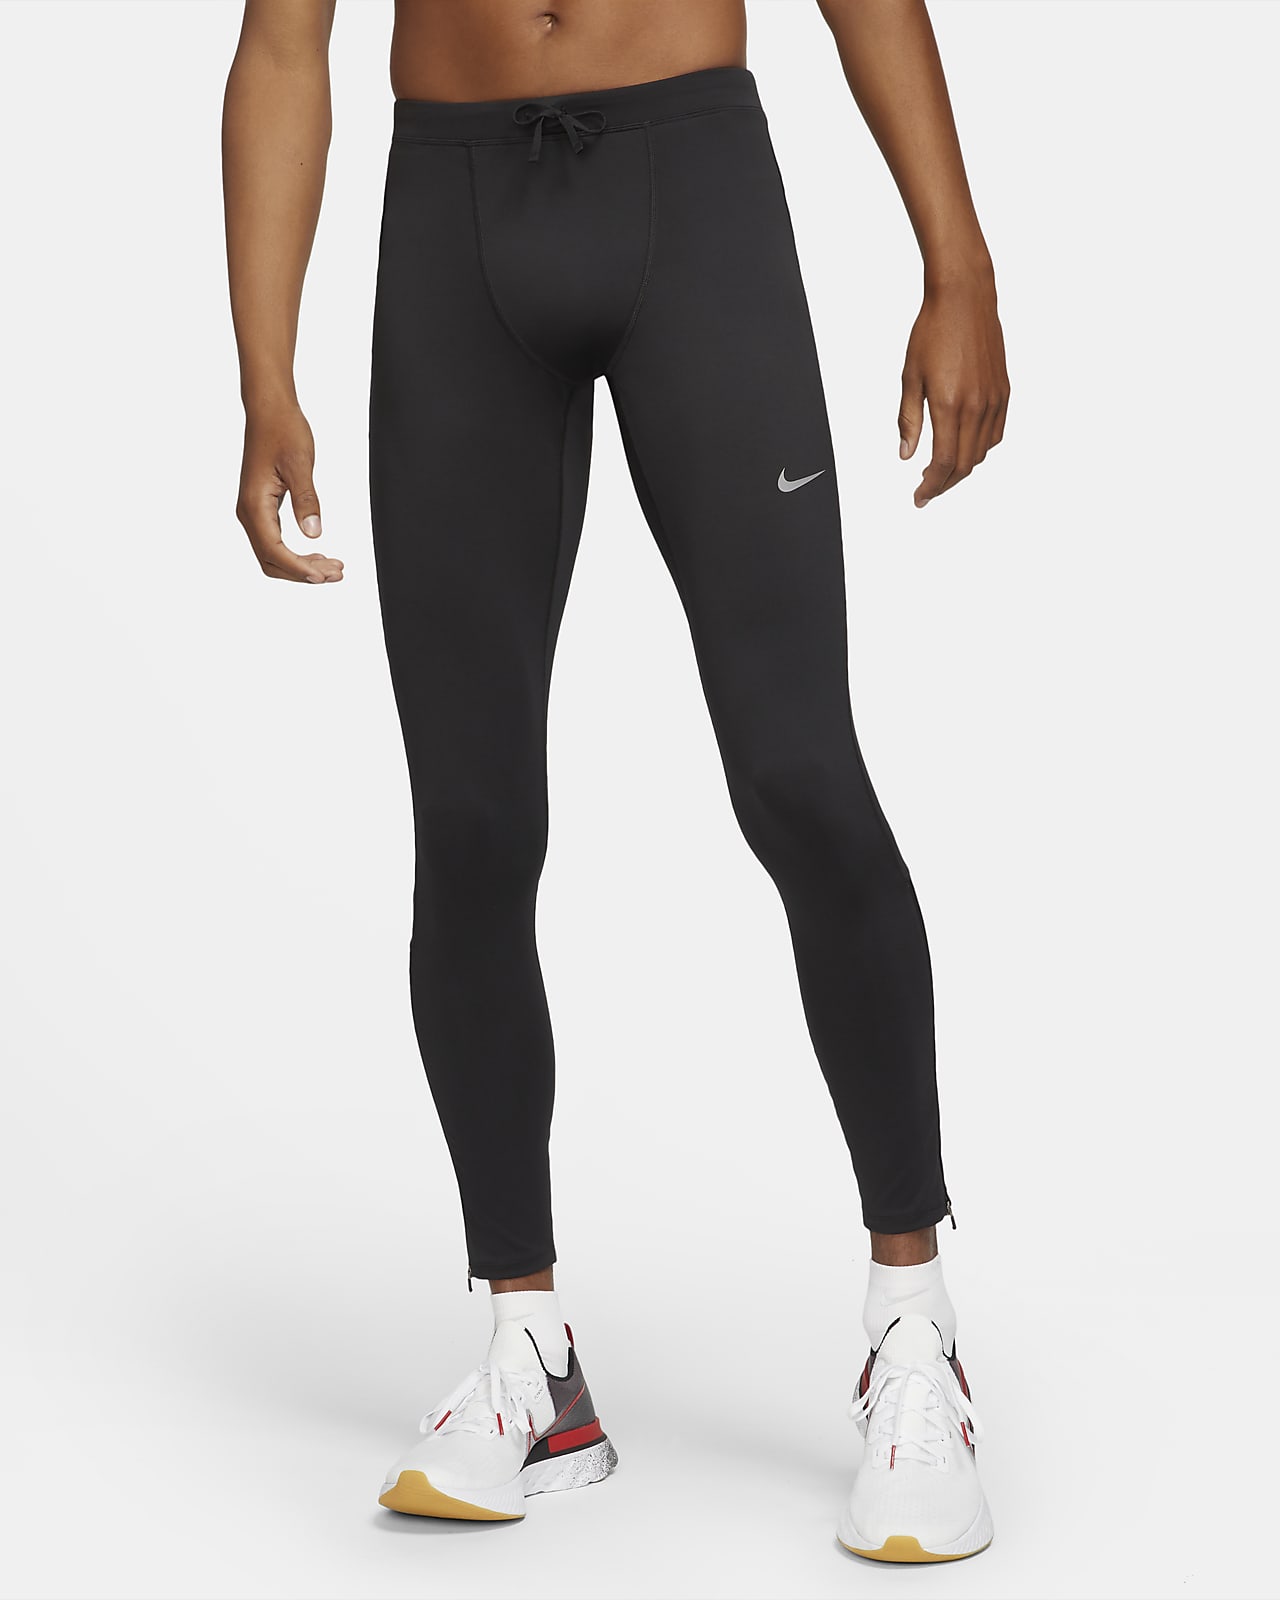 Legging de running Dri-FIT Nike Challenger pour homme